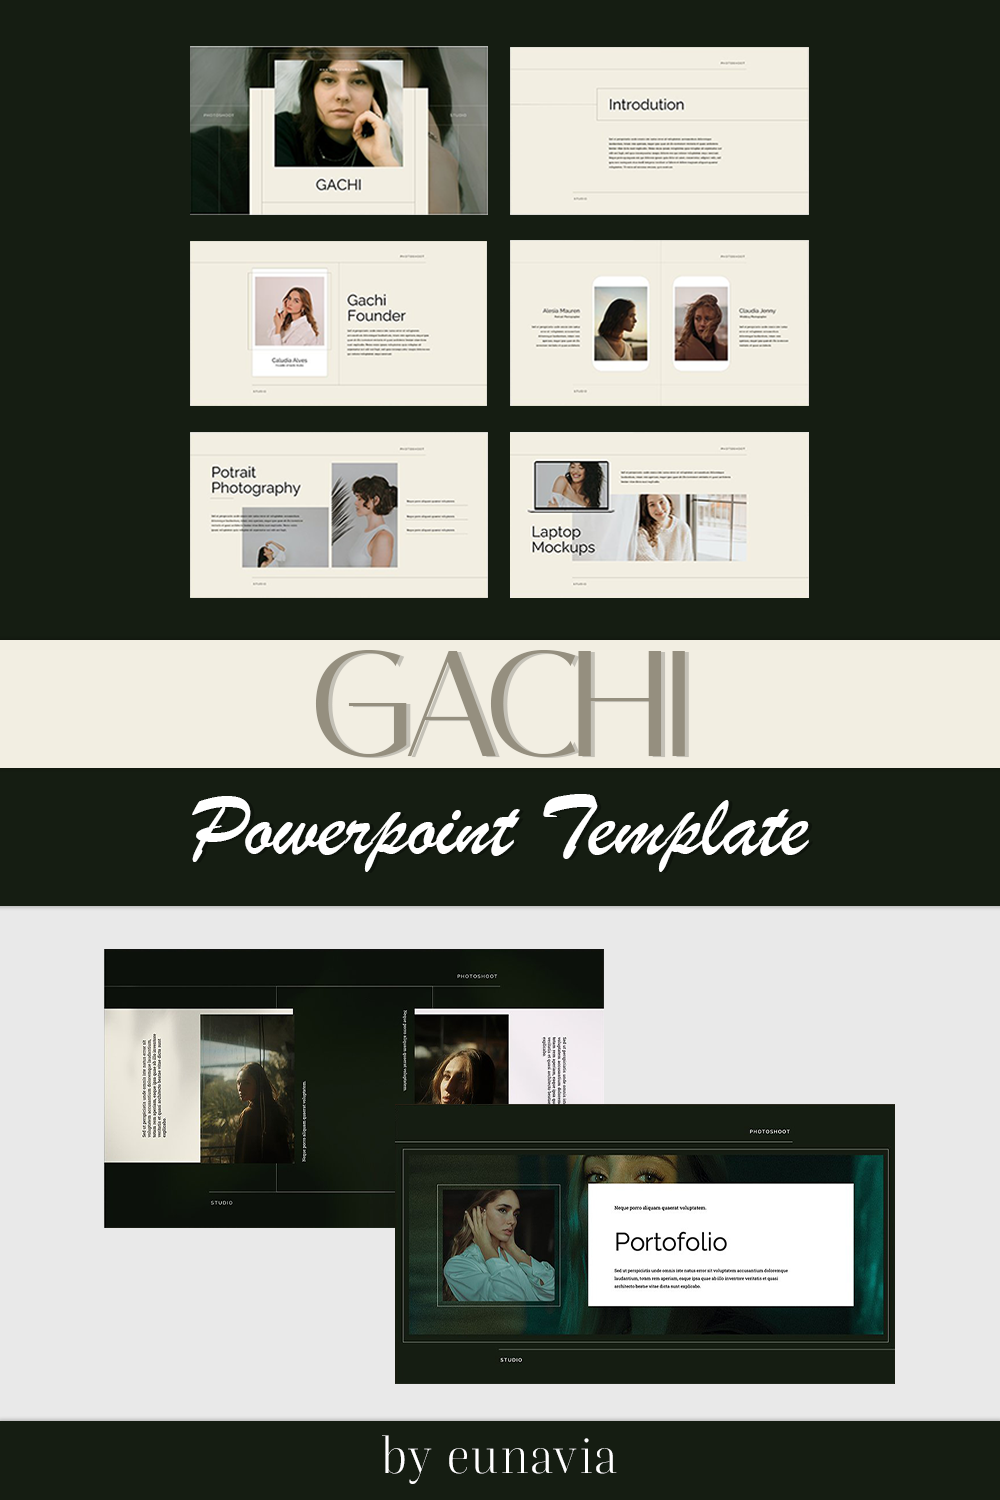 Gachi powerpoint template of pinterest.